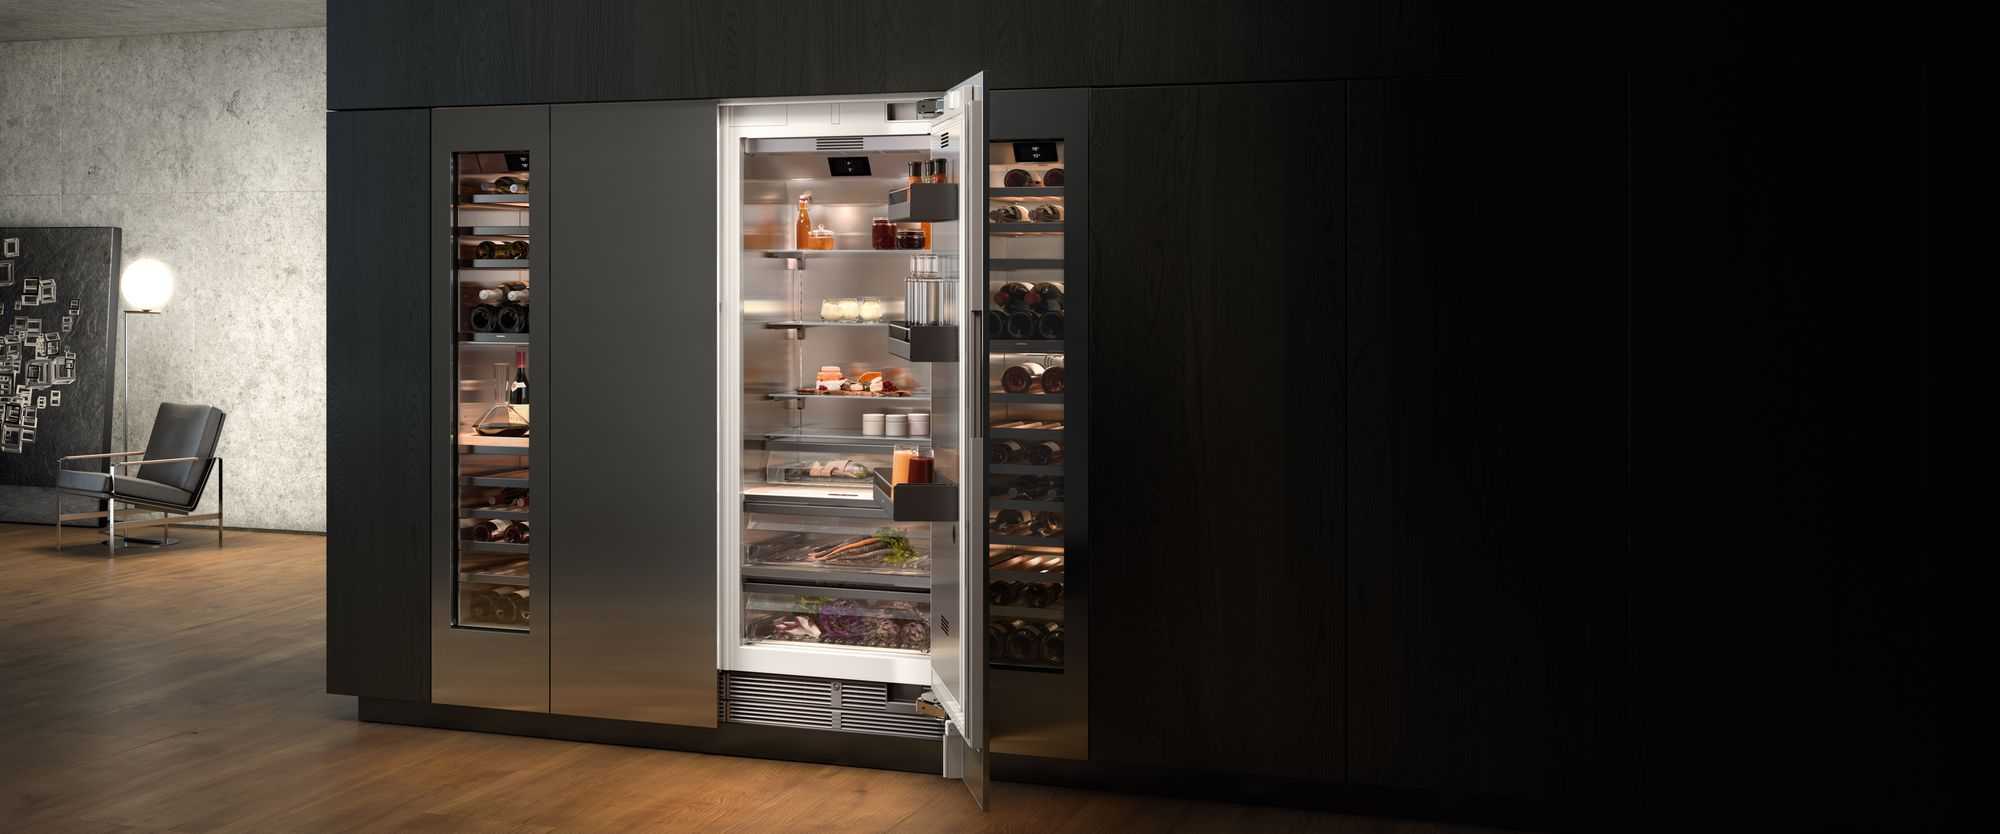 Gaggenau Refrigerators Vario 400 Series by FCI London